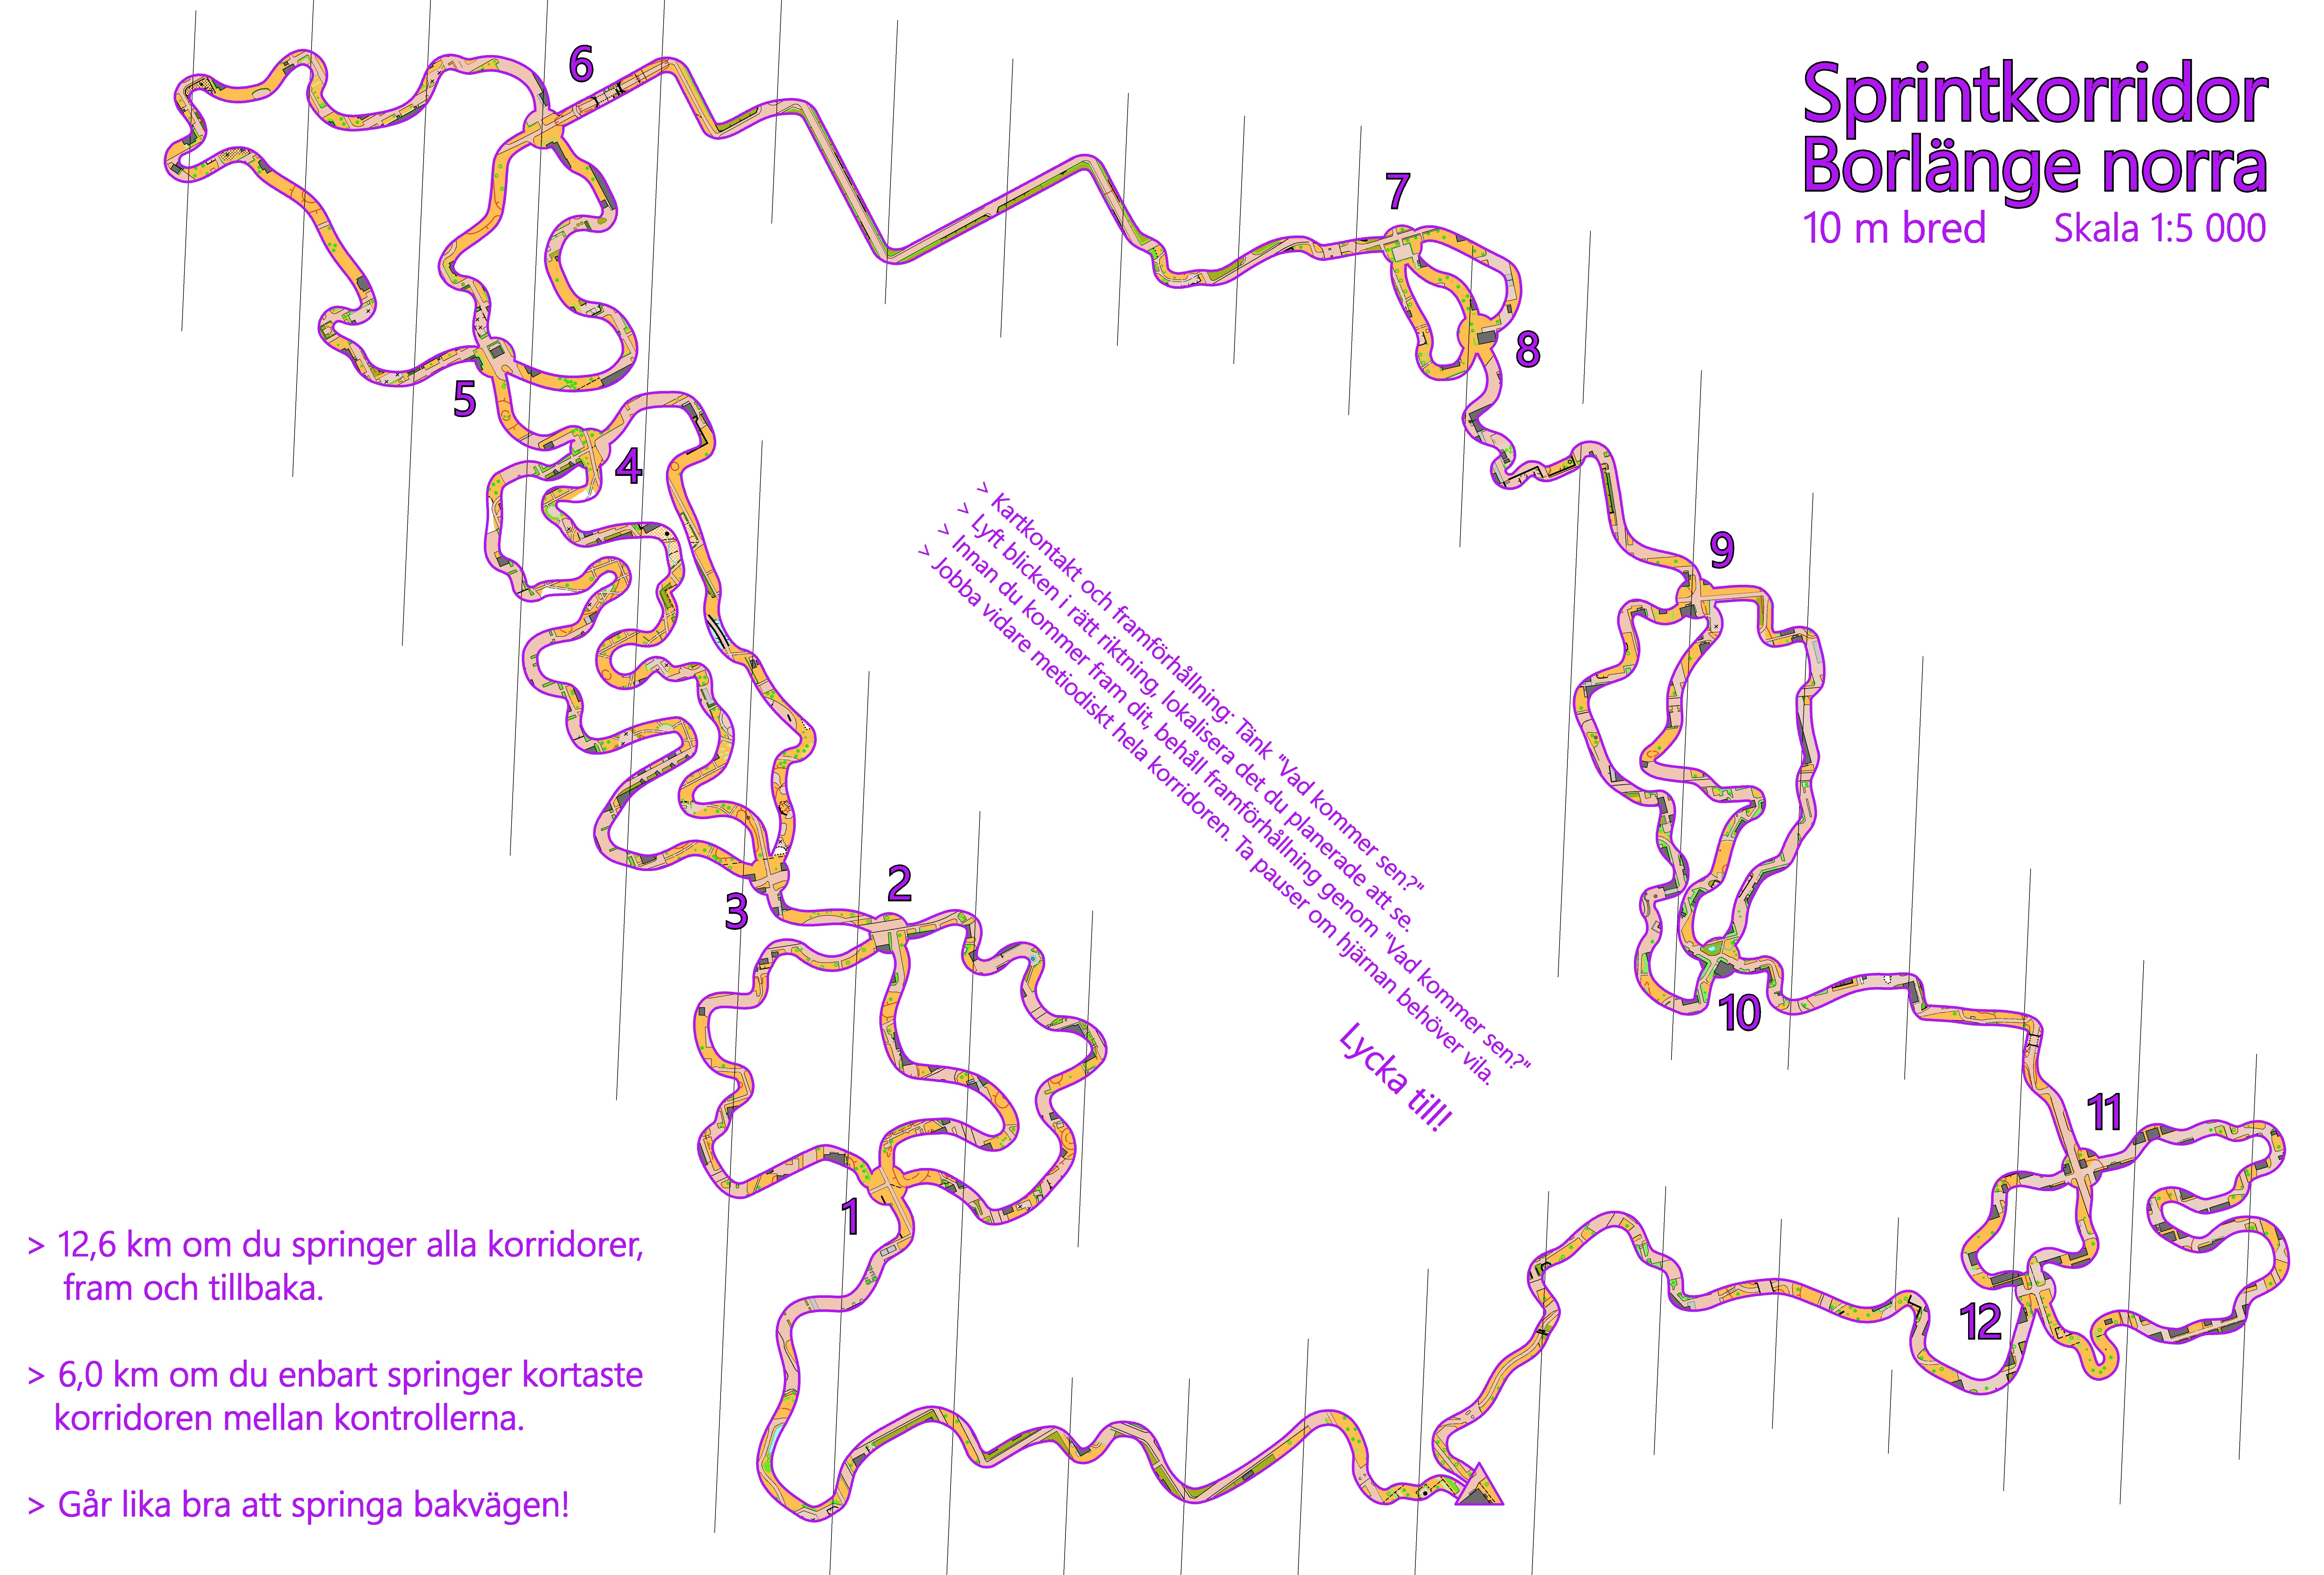 Sprintkorridor Borlänge (07/02/2018)